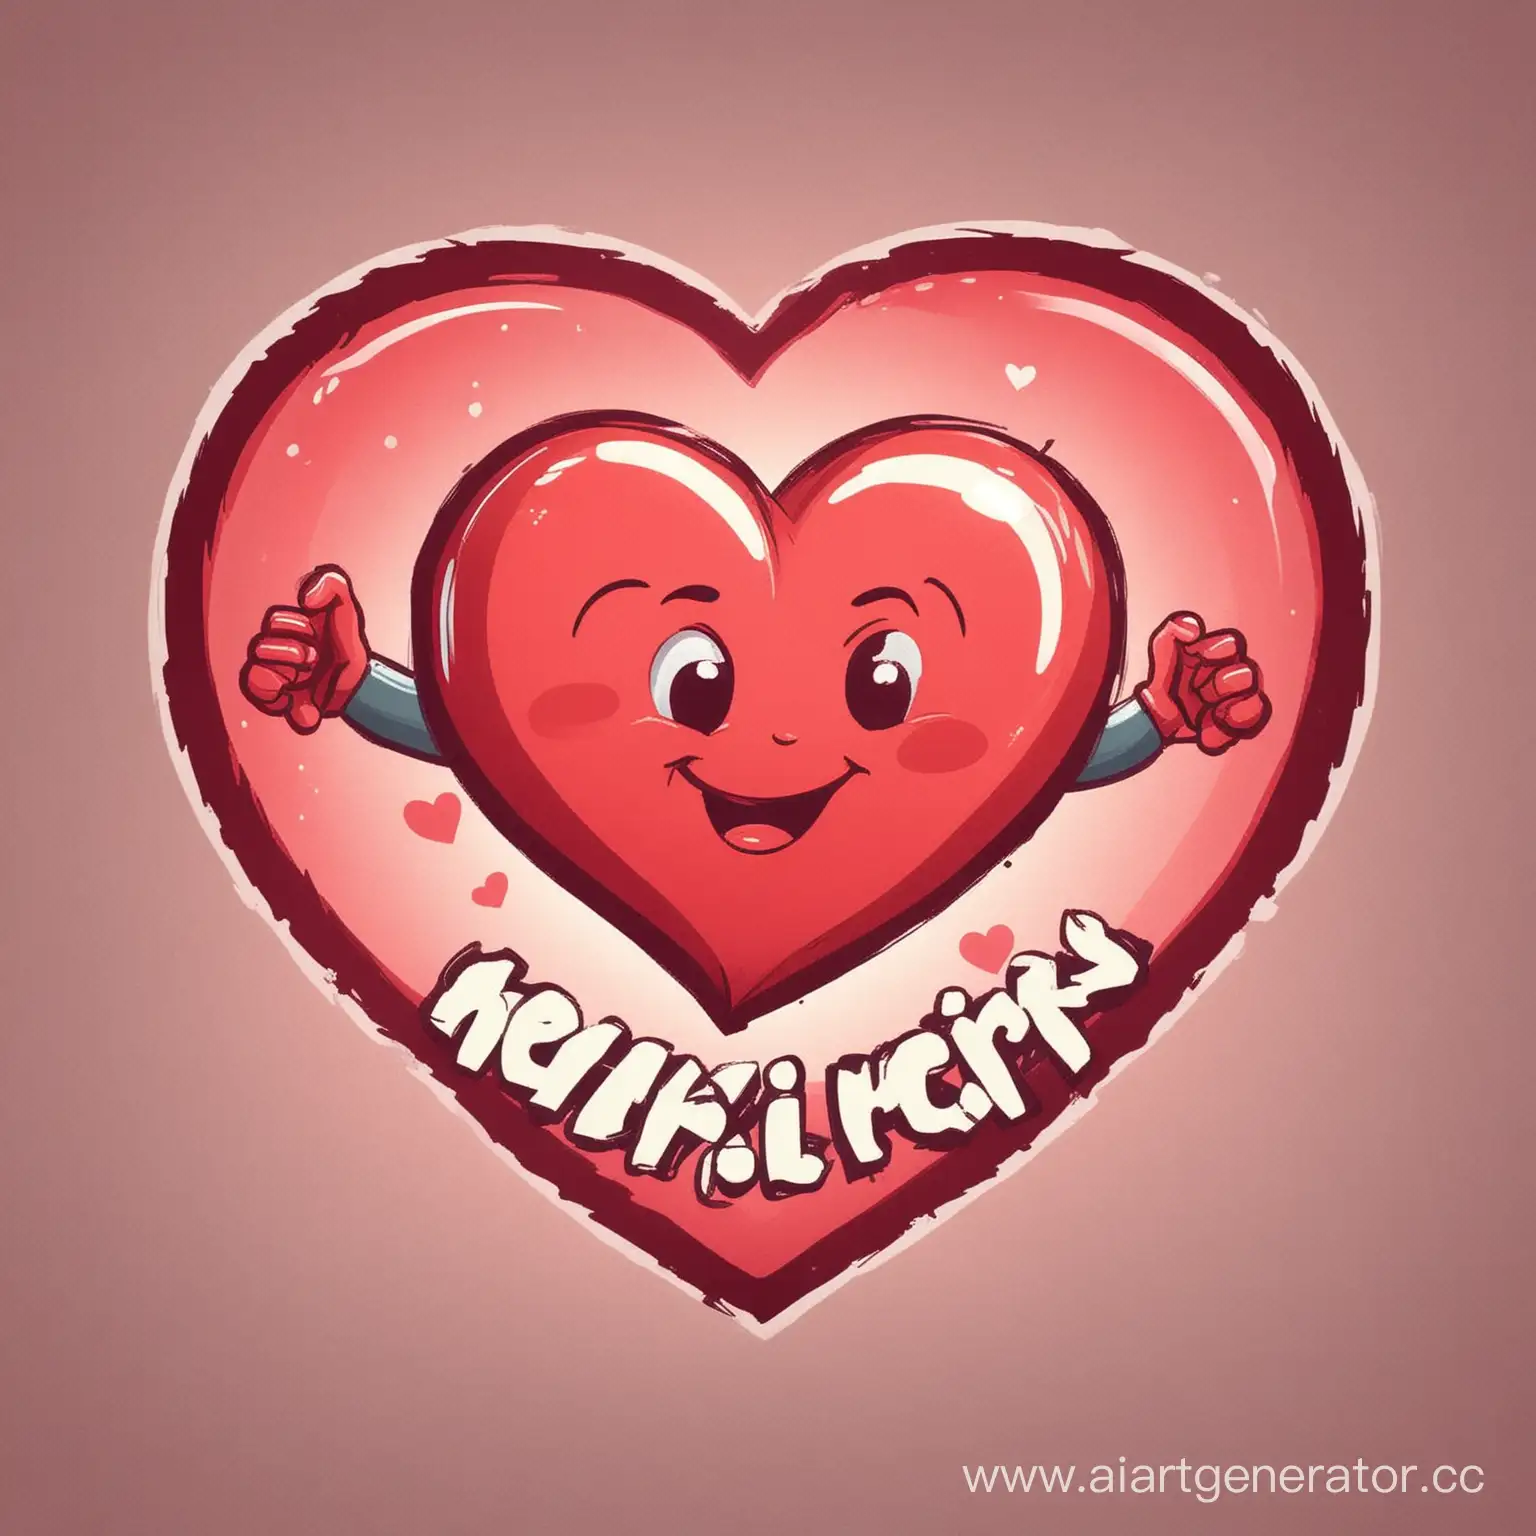 Energetic-Heart-Cartoon-Running-Logo-for-Dynamic-Brands